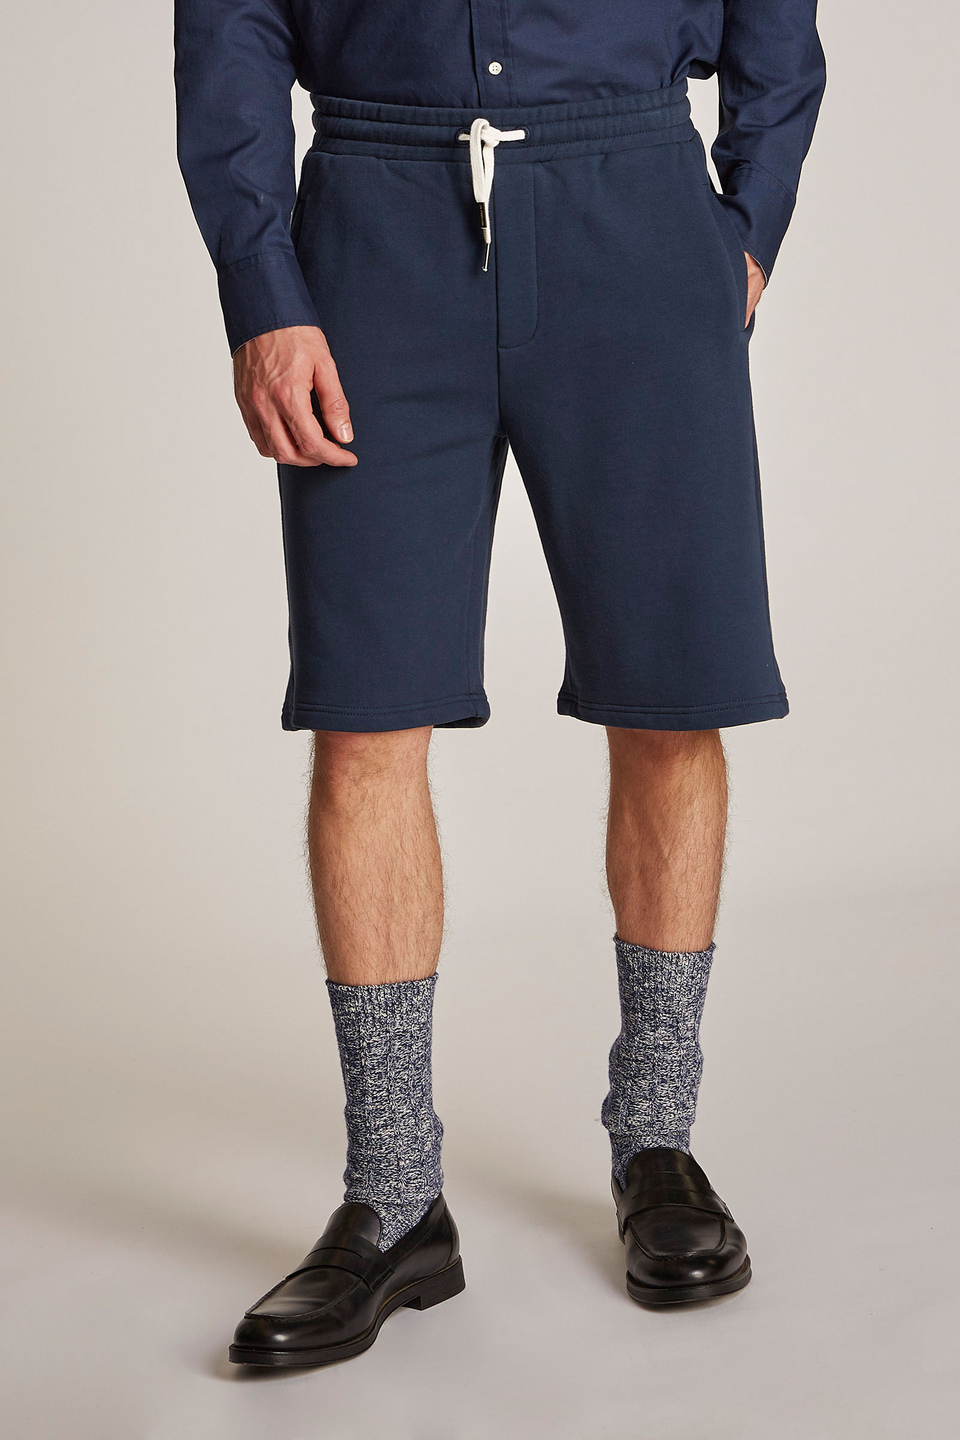 Men's oversized Bermuda shorts in 100% stretch cotton fabric | La Martina - Official Online Shop